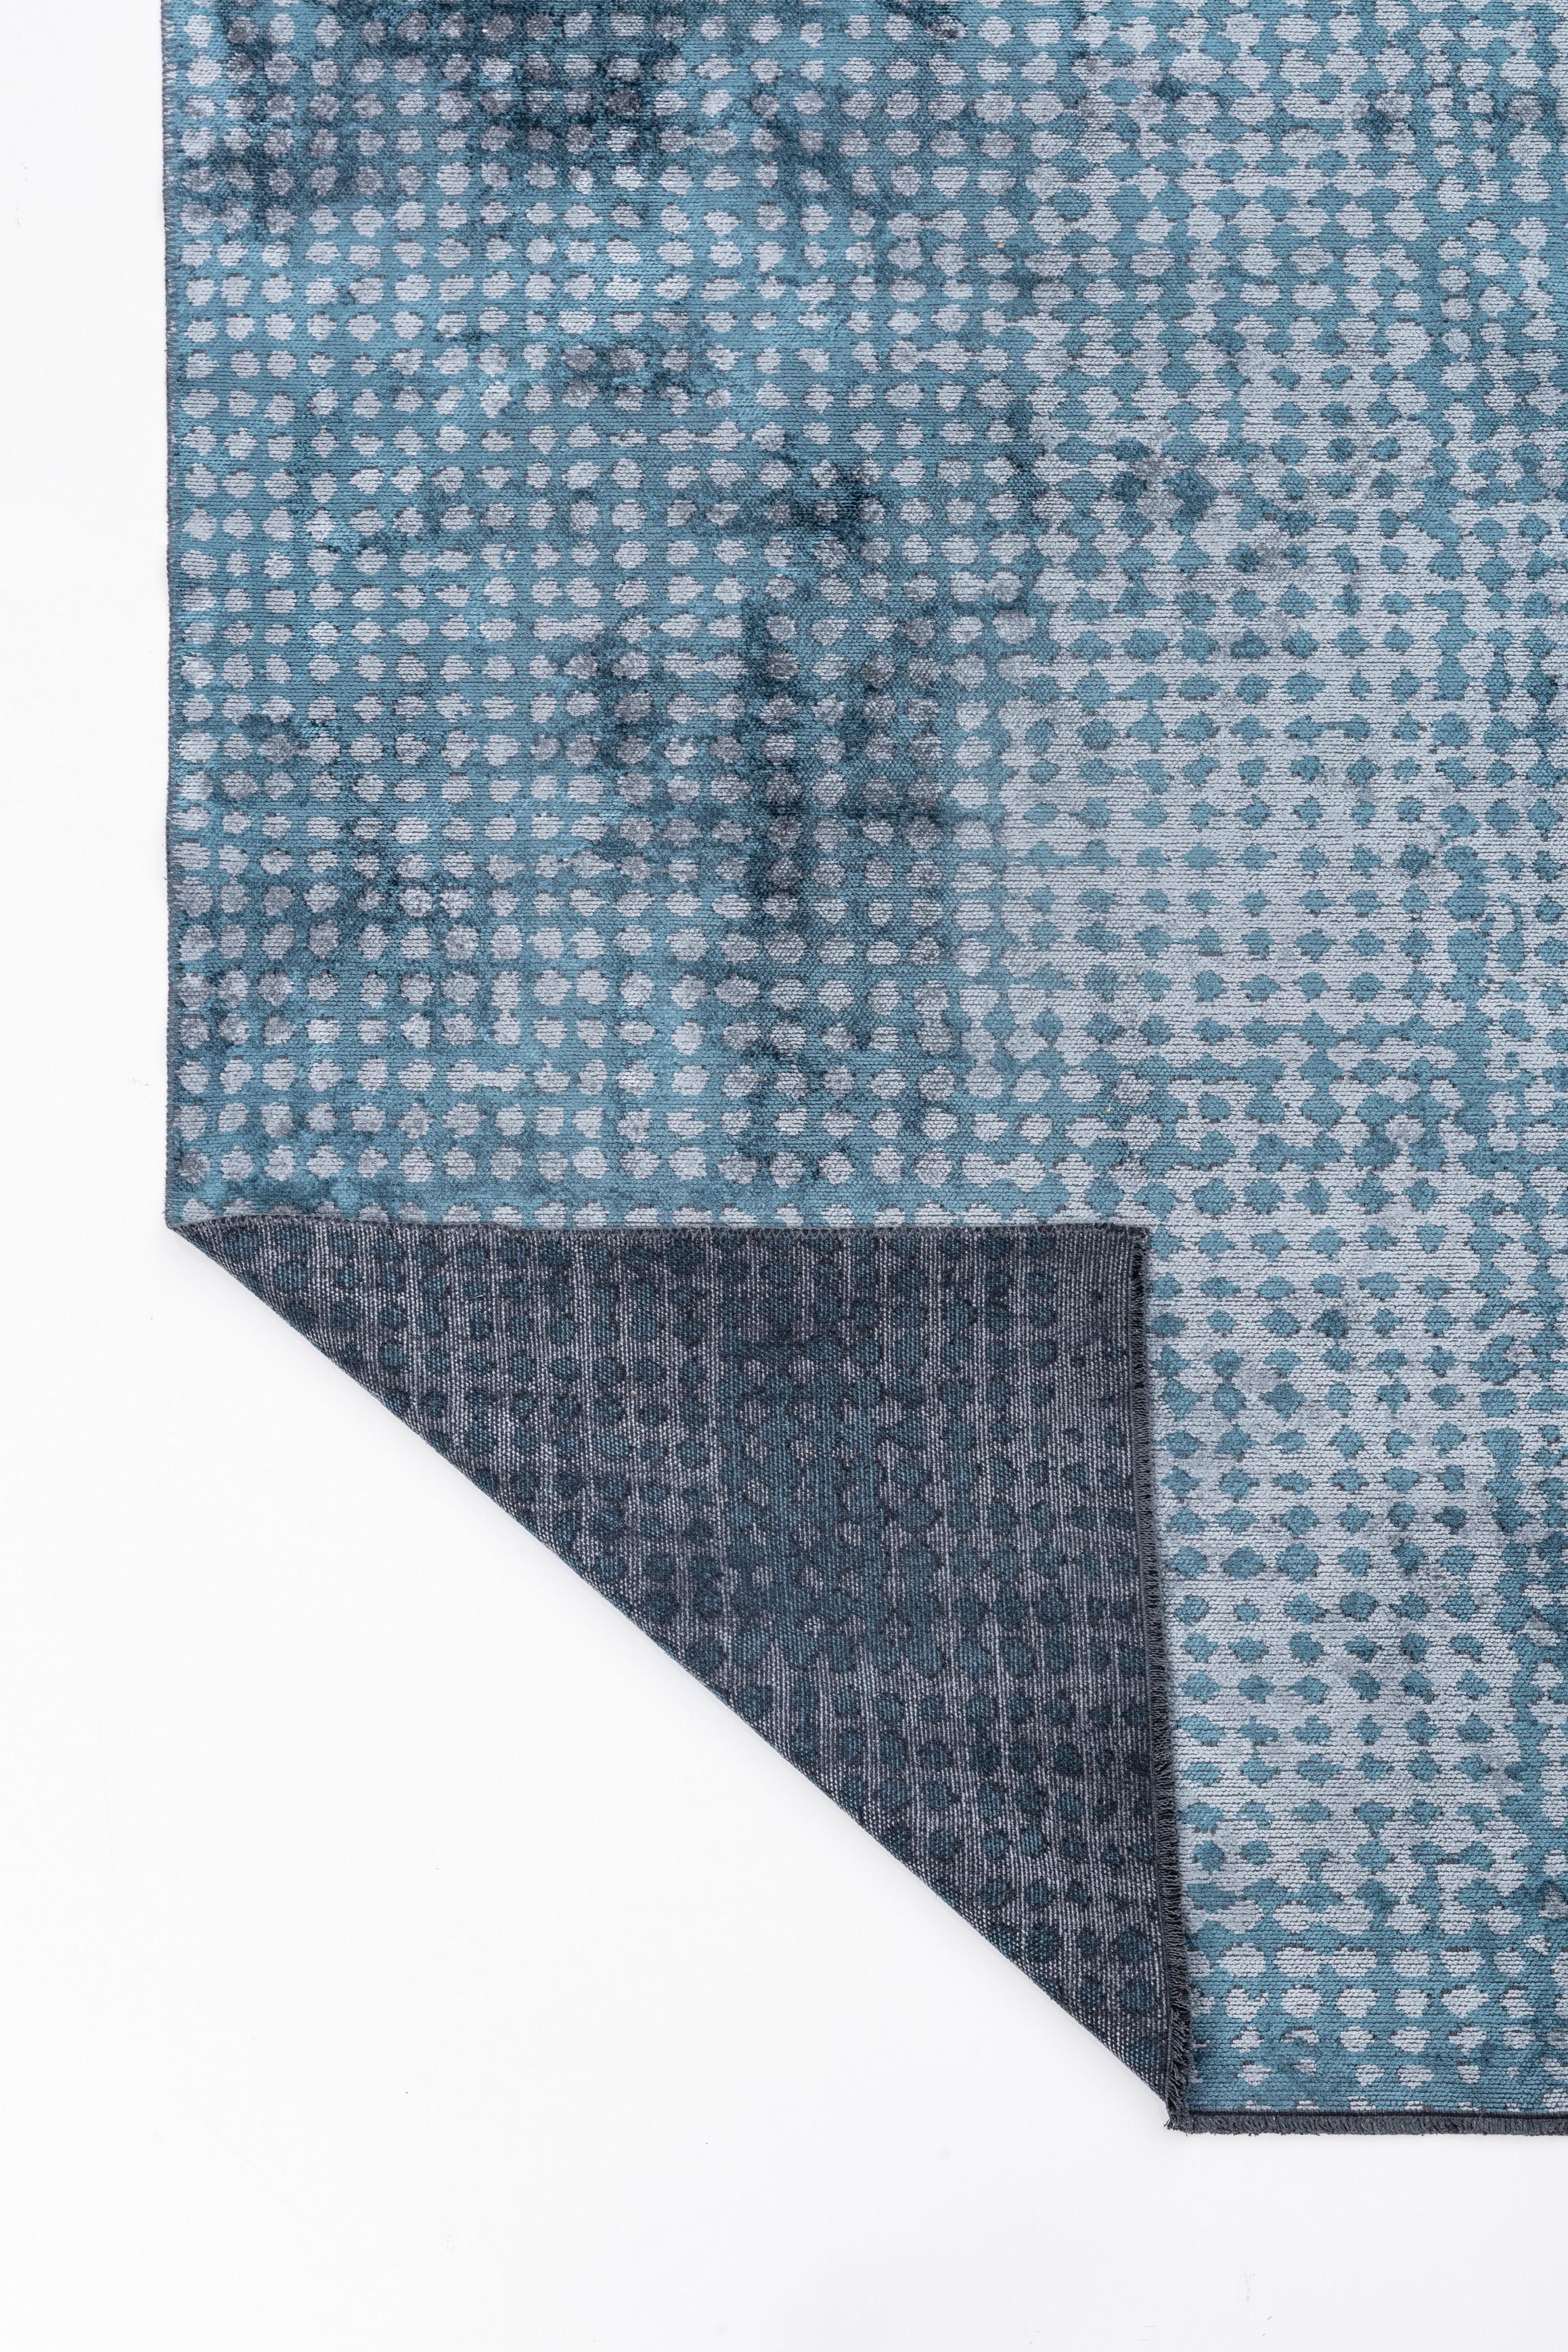 Im Angebot: Modern Polka Dots Luxury Hand-Finished Area Rug,  (Blau) 3